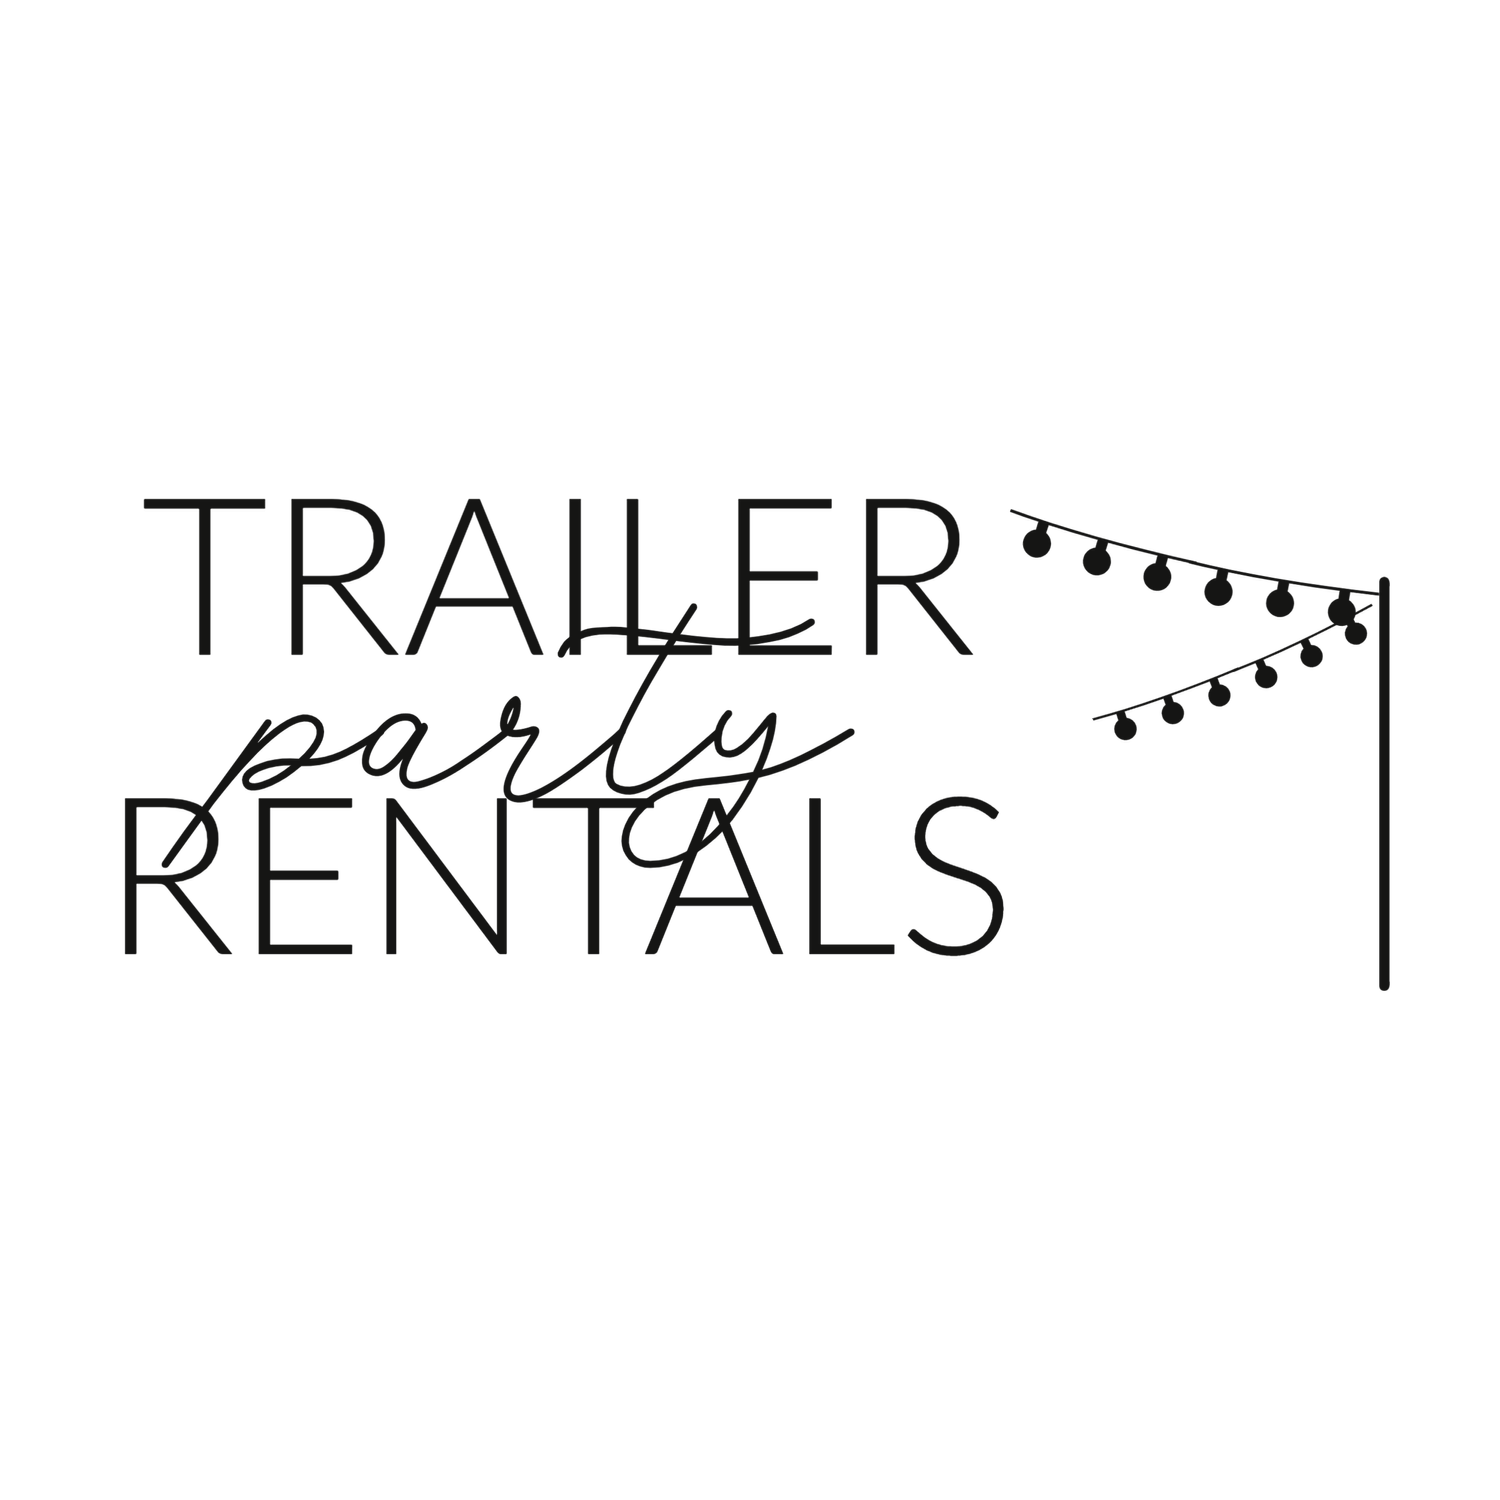 Trailer Party Rentals